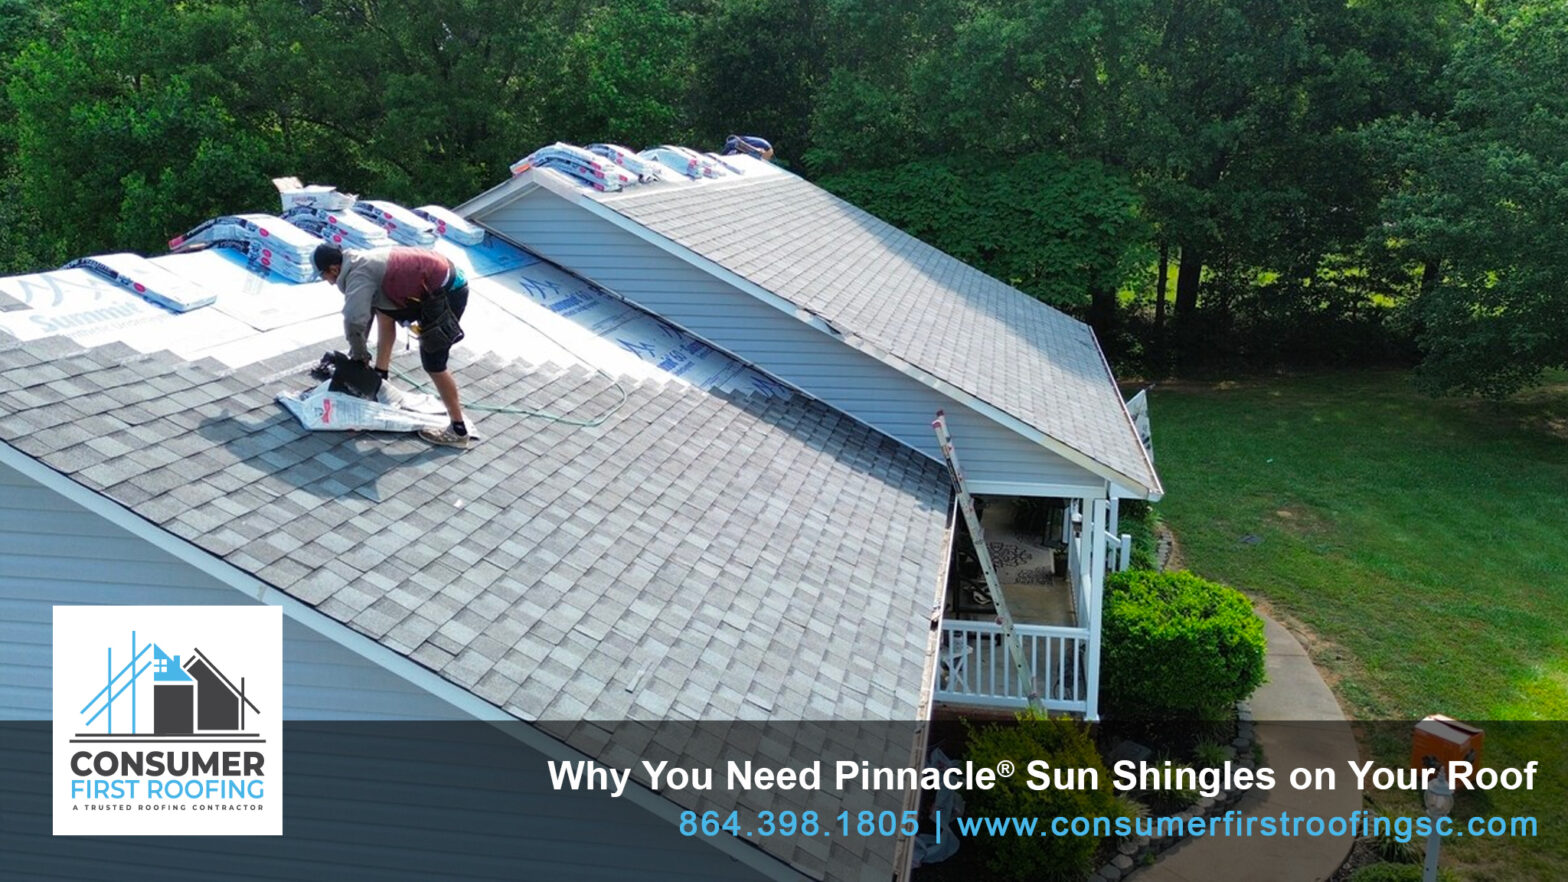 Pinnacle® Sun Shingles